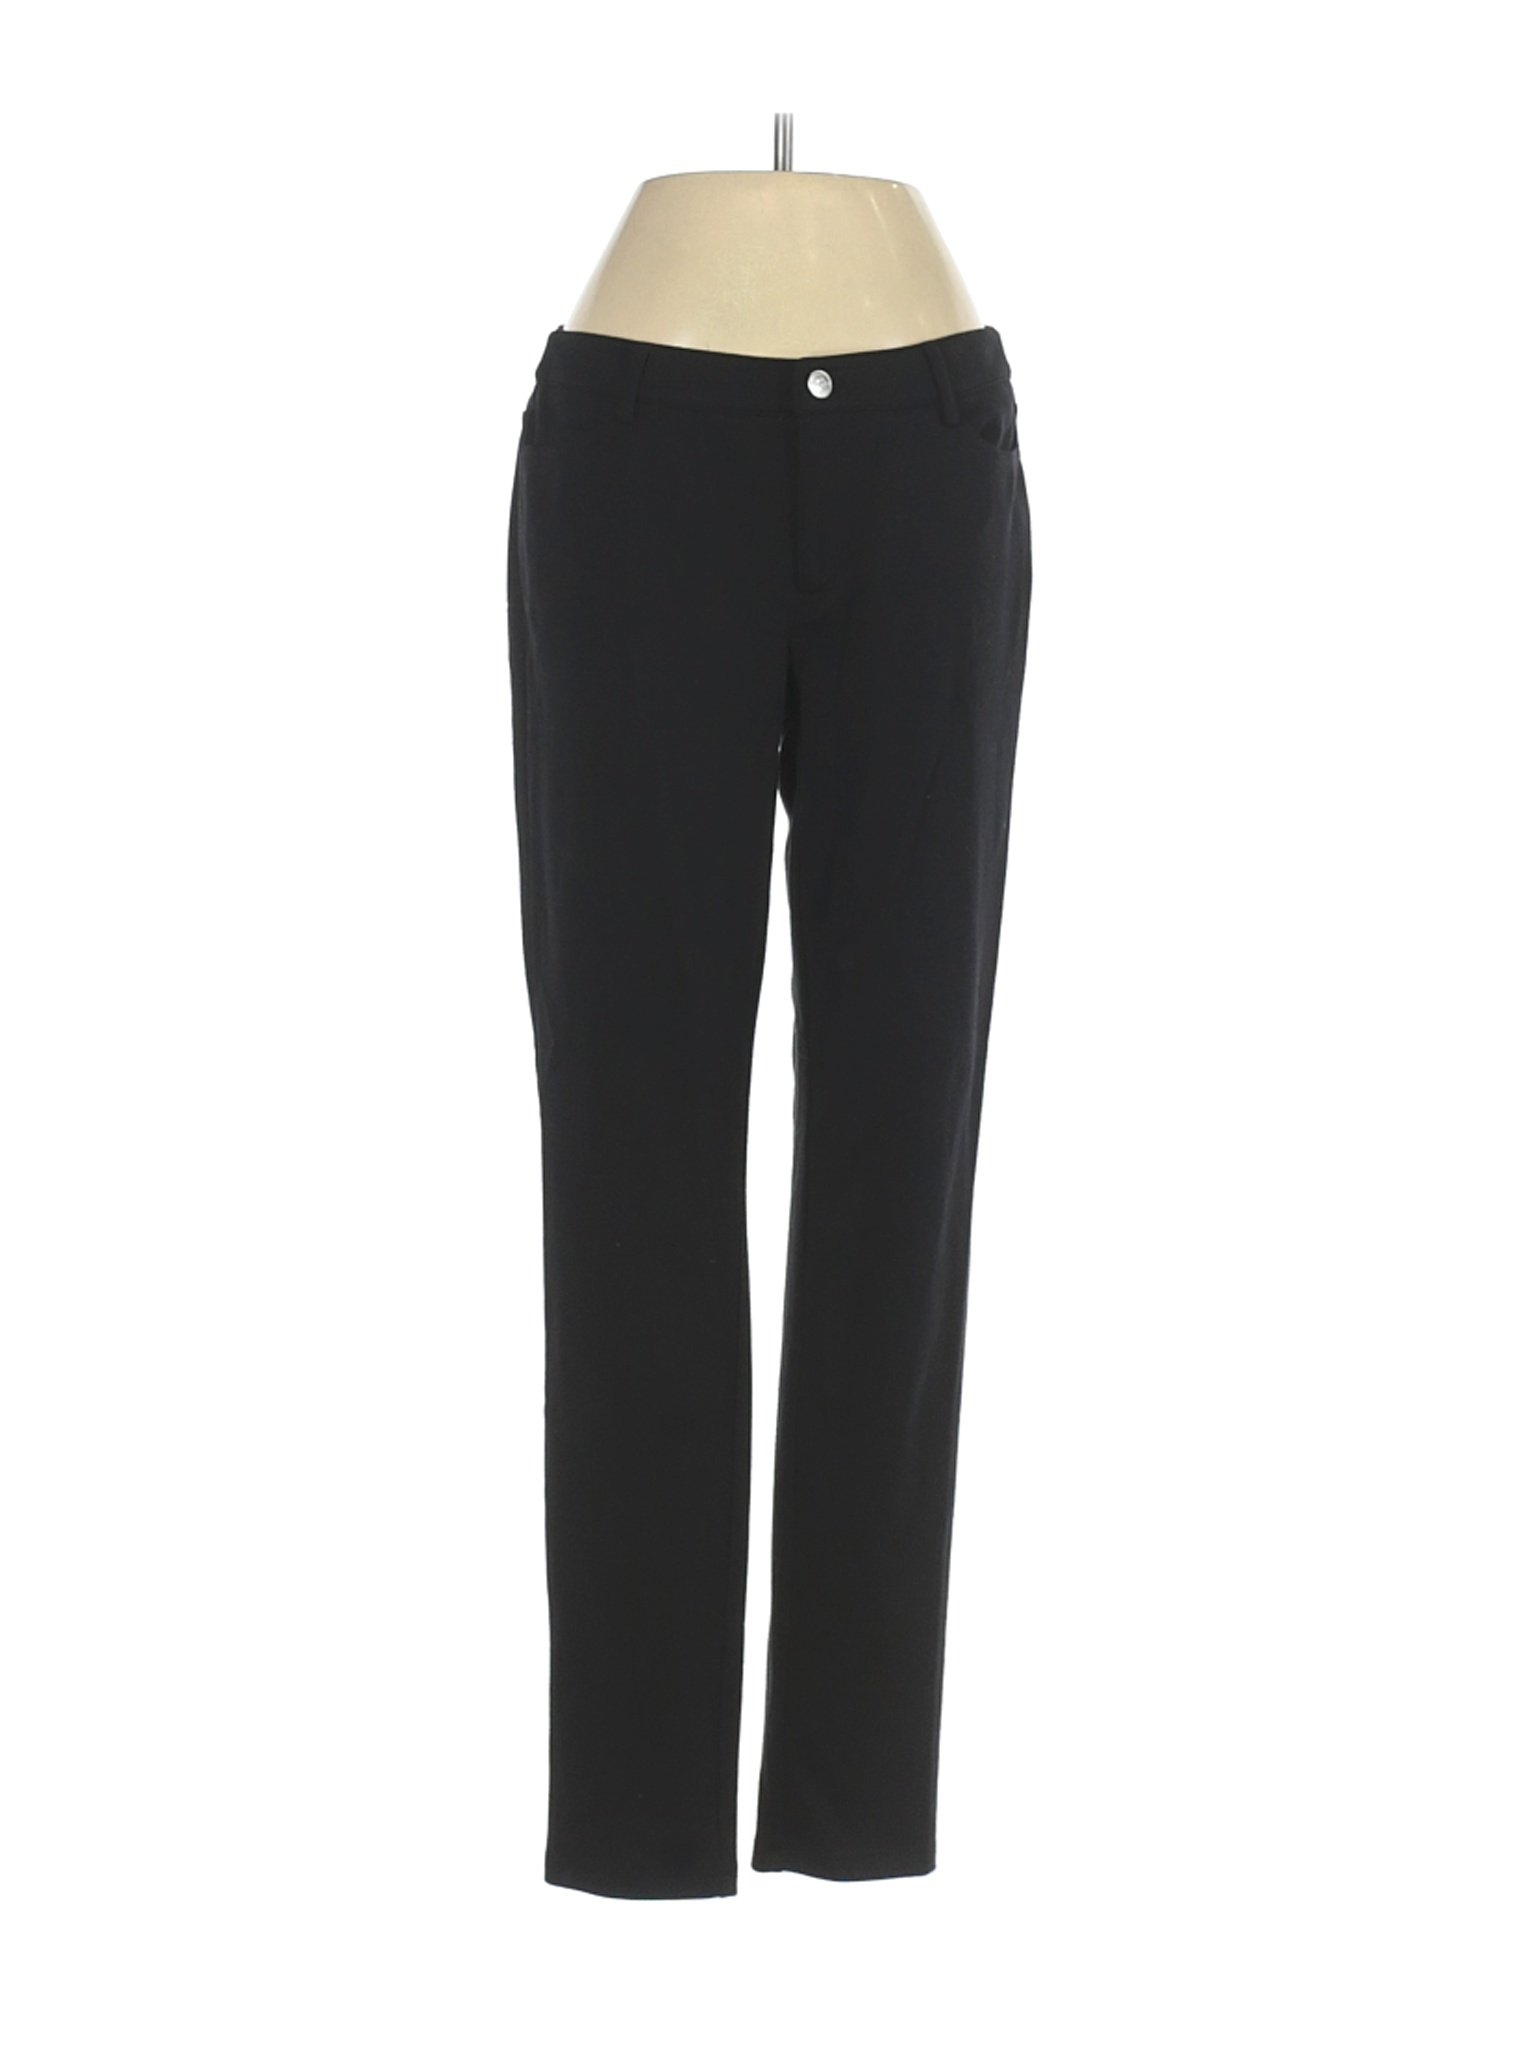 MICHAEL Michael Kors Women Black Casual Pants 2 | eBay